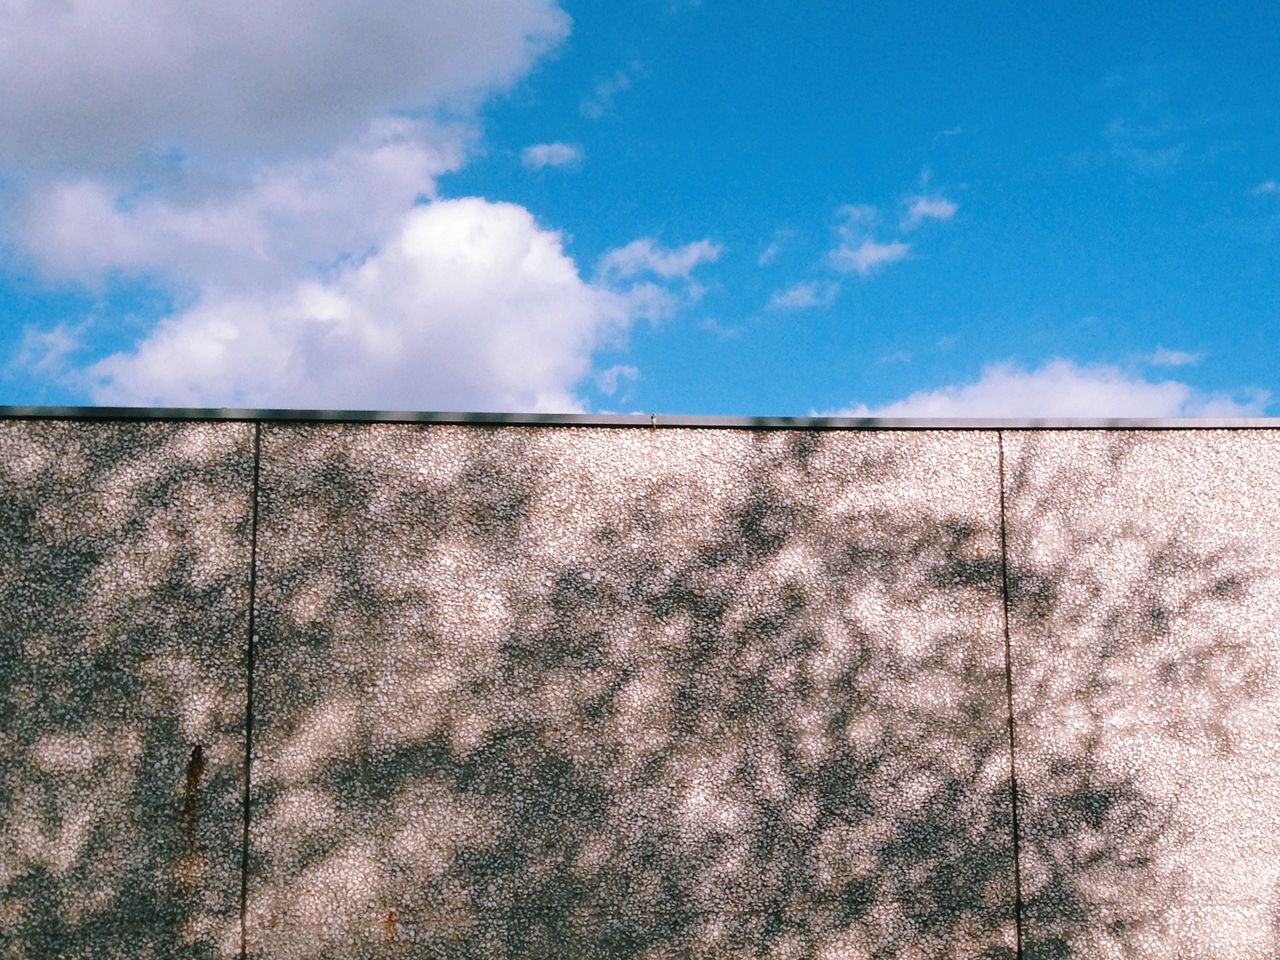 Wall against cloudy sky